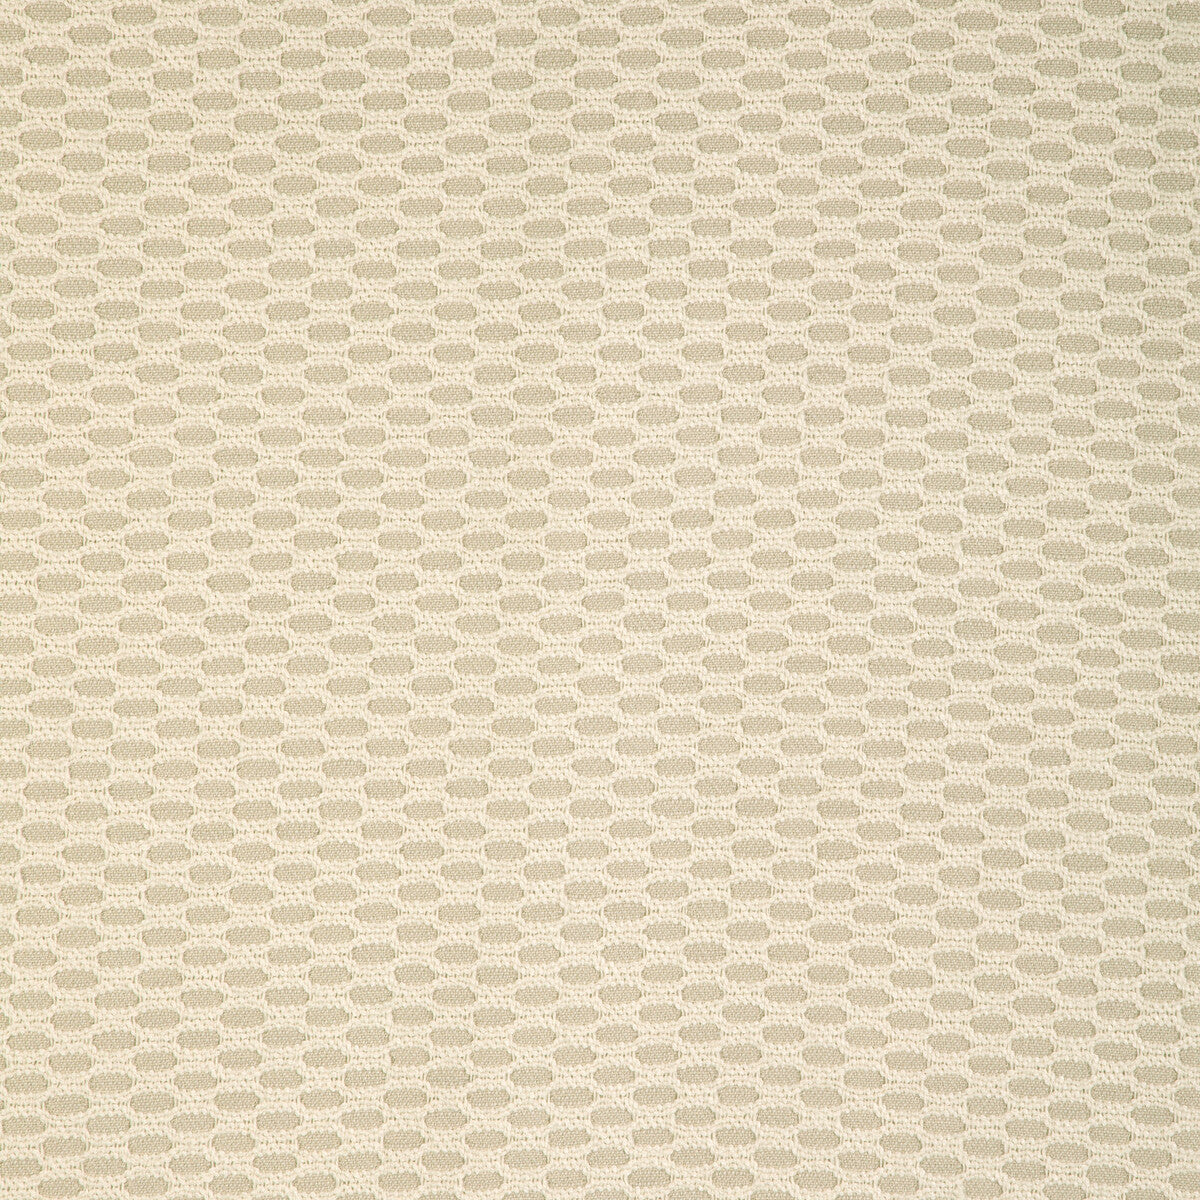 Kravet Smart fabric in 37005-116 color - pattern 37005.116.0 - by Kravet Smart in the Pavilion collection